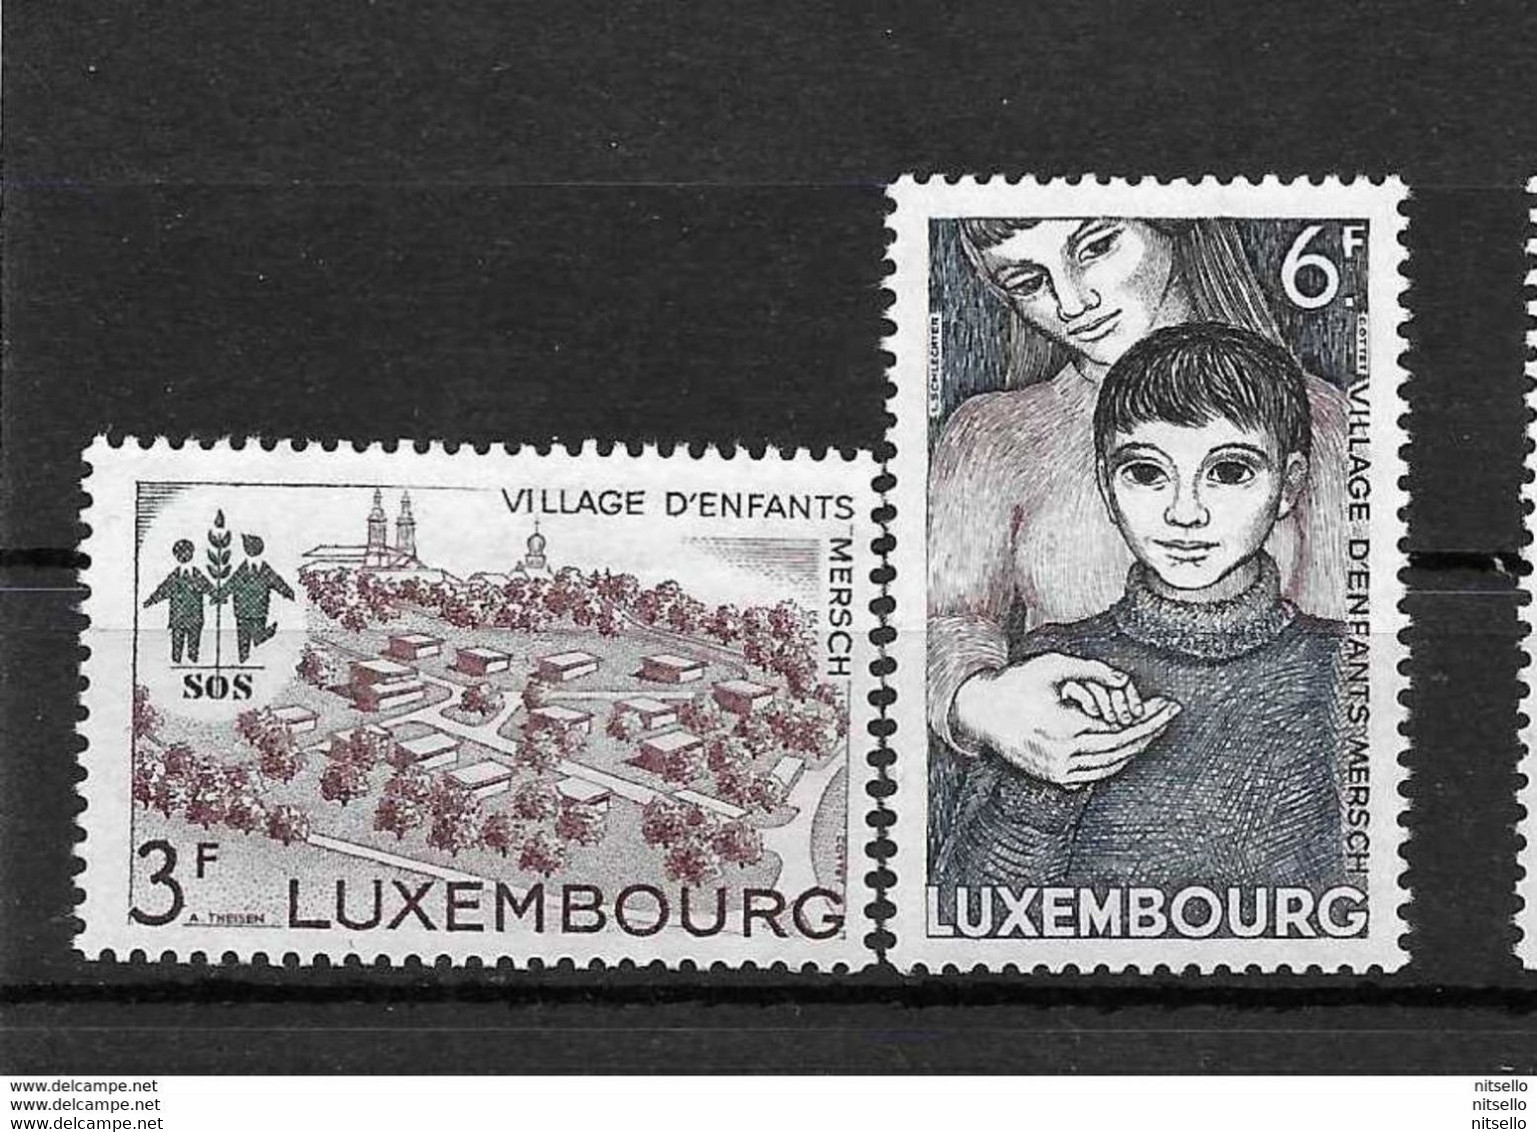 LOTE 1442 ///  (C010) LUXEMBURGO    YVERT Nº: 726/727  **MNH - Unused Stamps